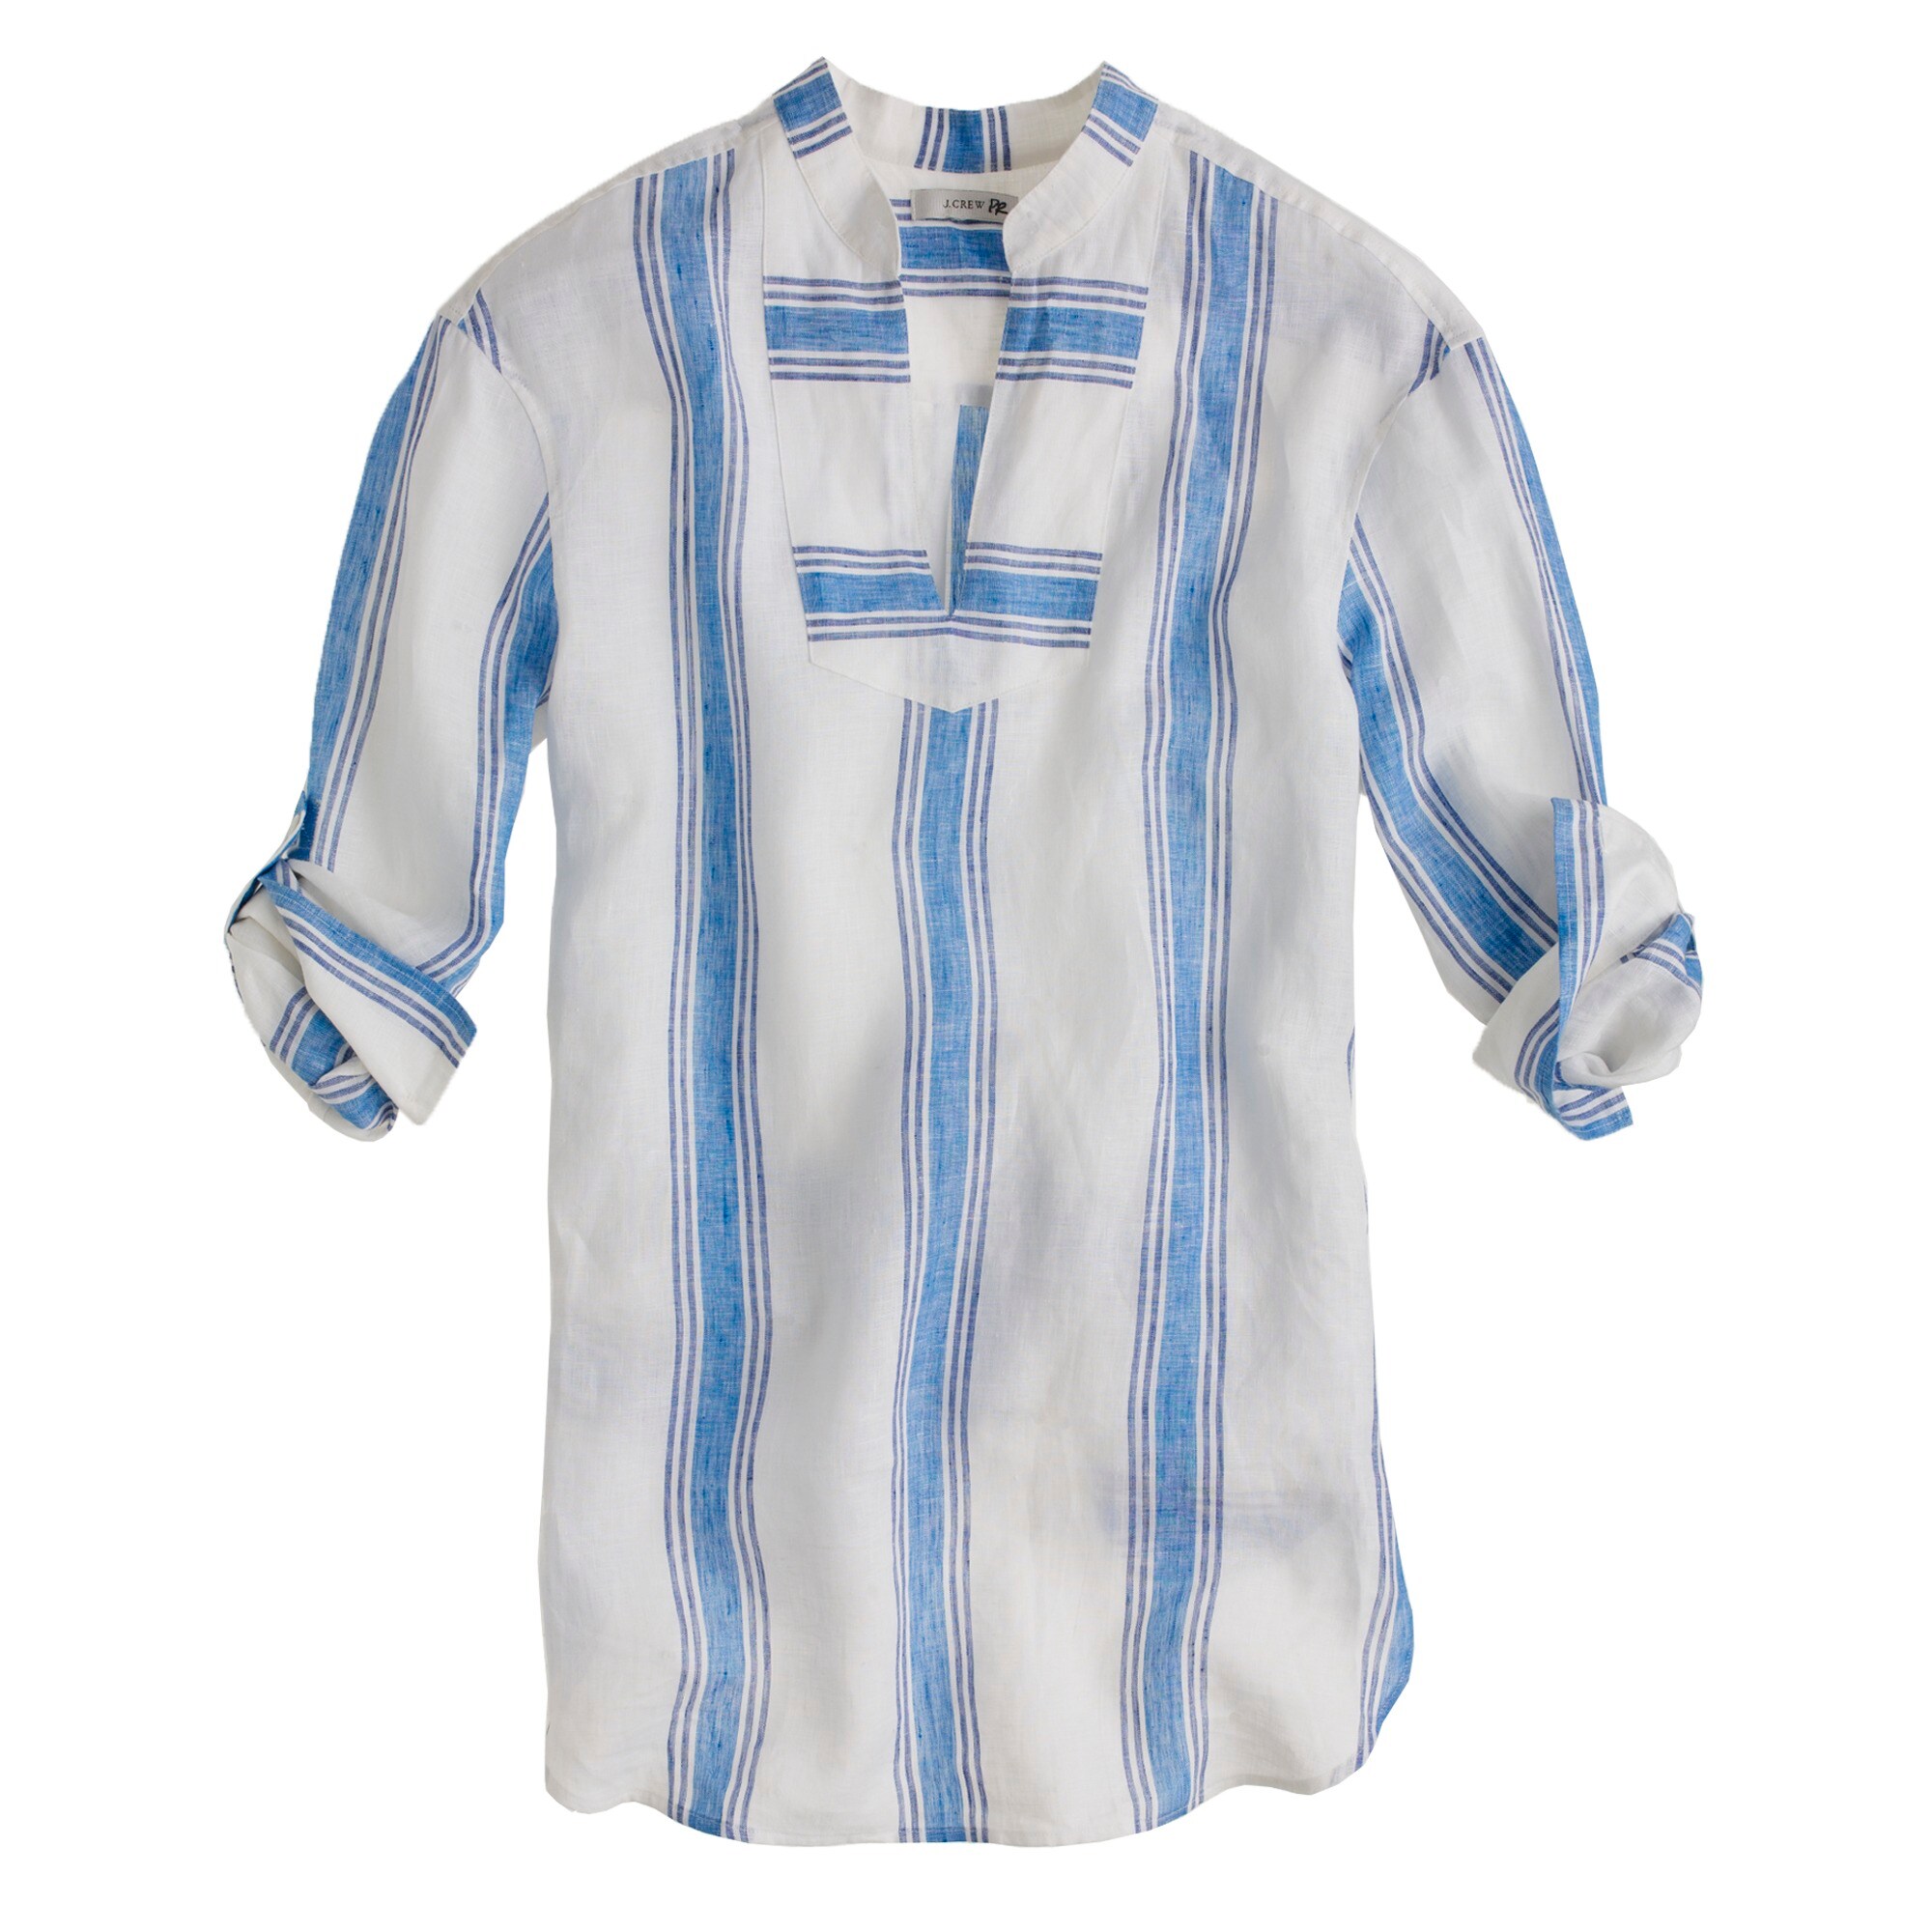 Stripe linen tunic : Women tops & blouses | J.Crew